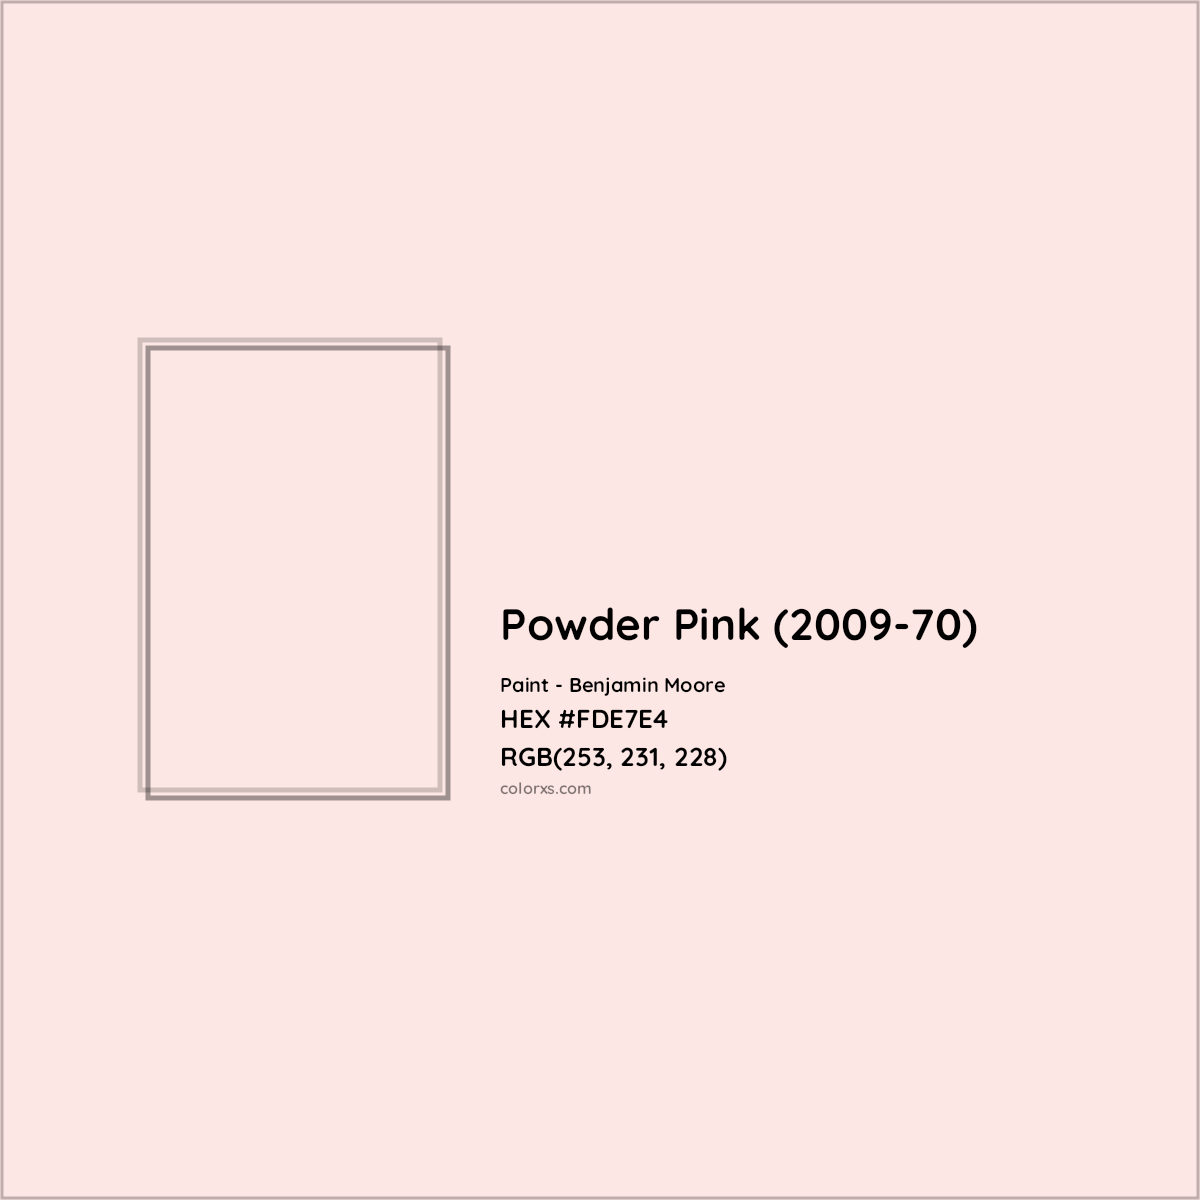 HEX #FDE7E4 Powder Pink (2009-70) Paint Benjamin Moore - Color Code